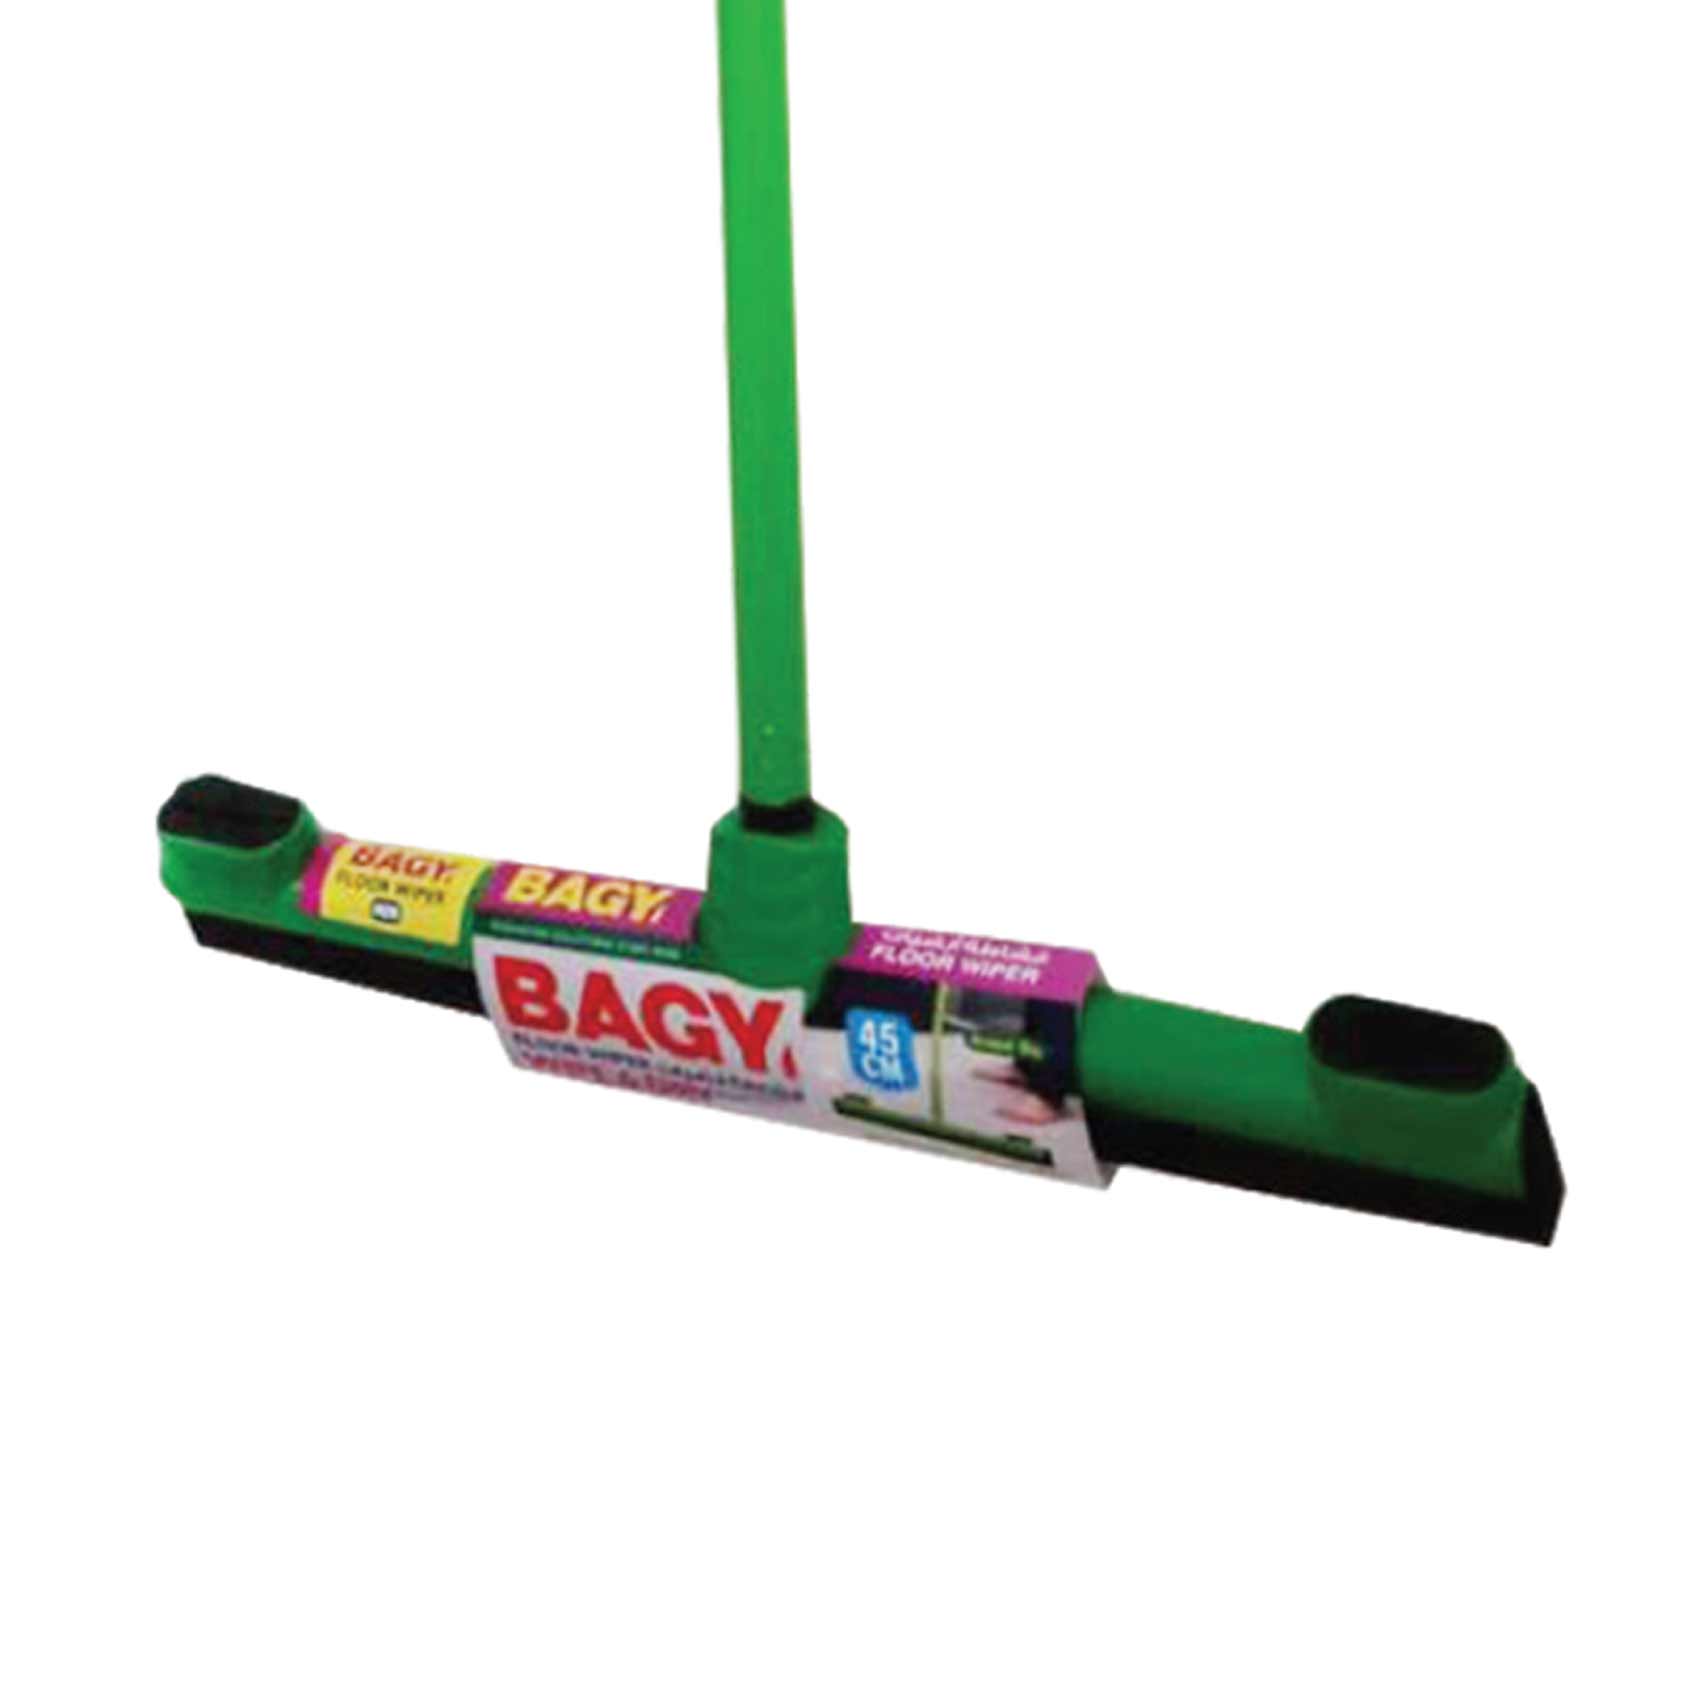 Bagy Floor Wiper 45 cm With Stick